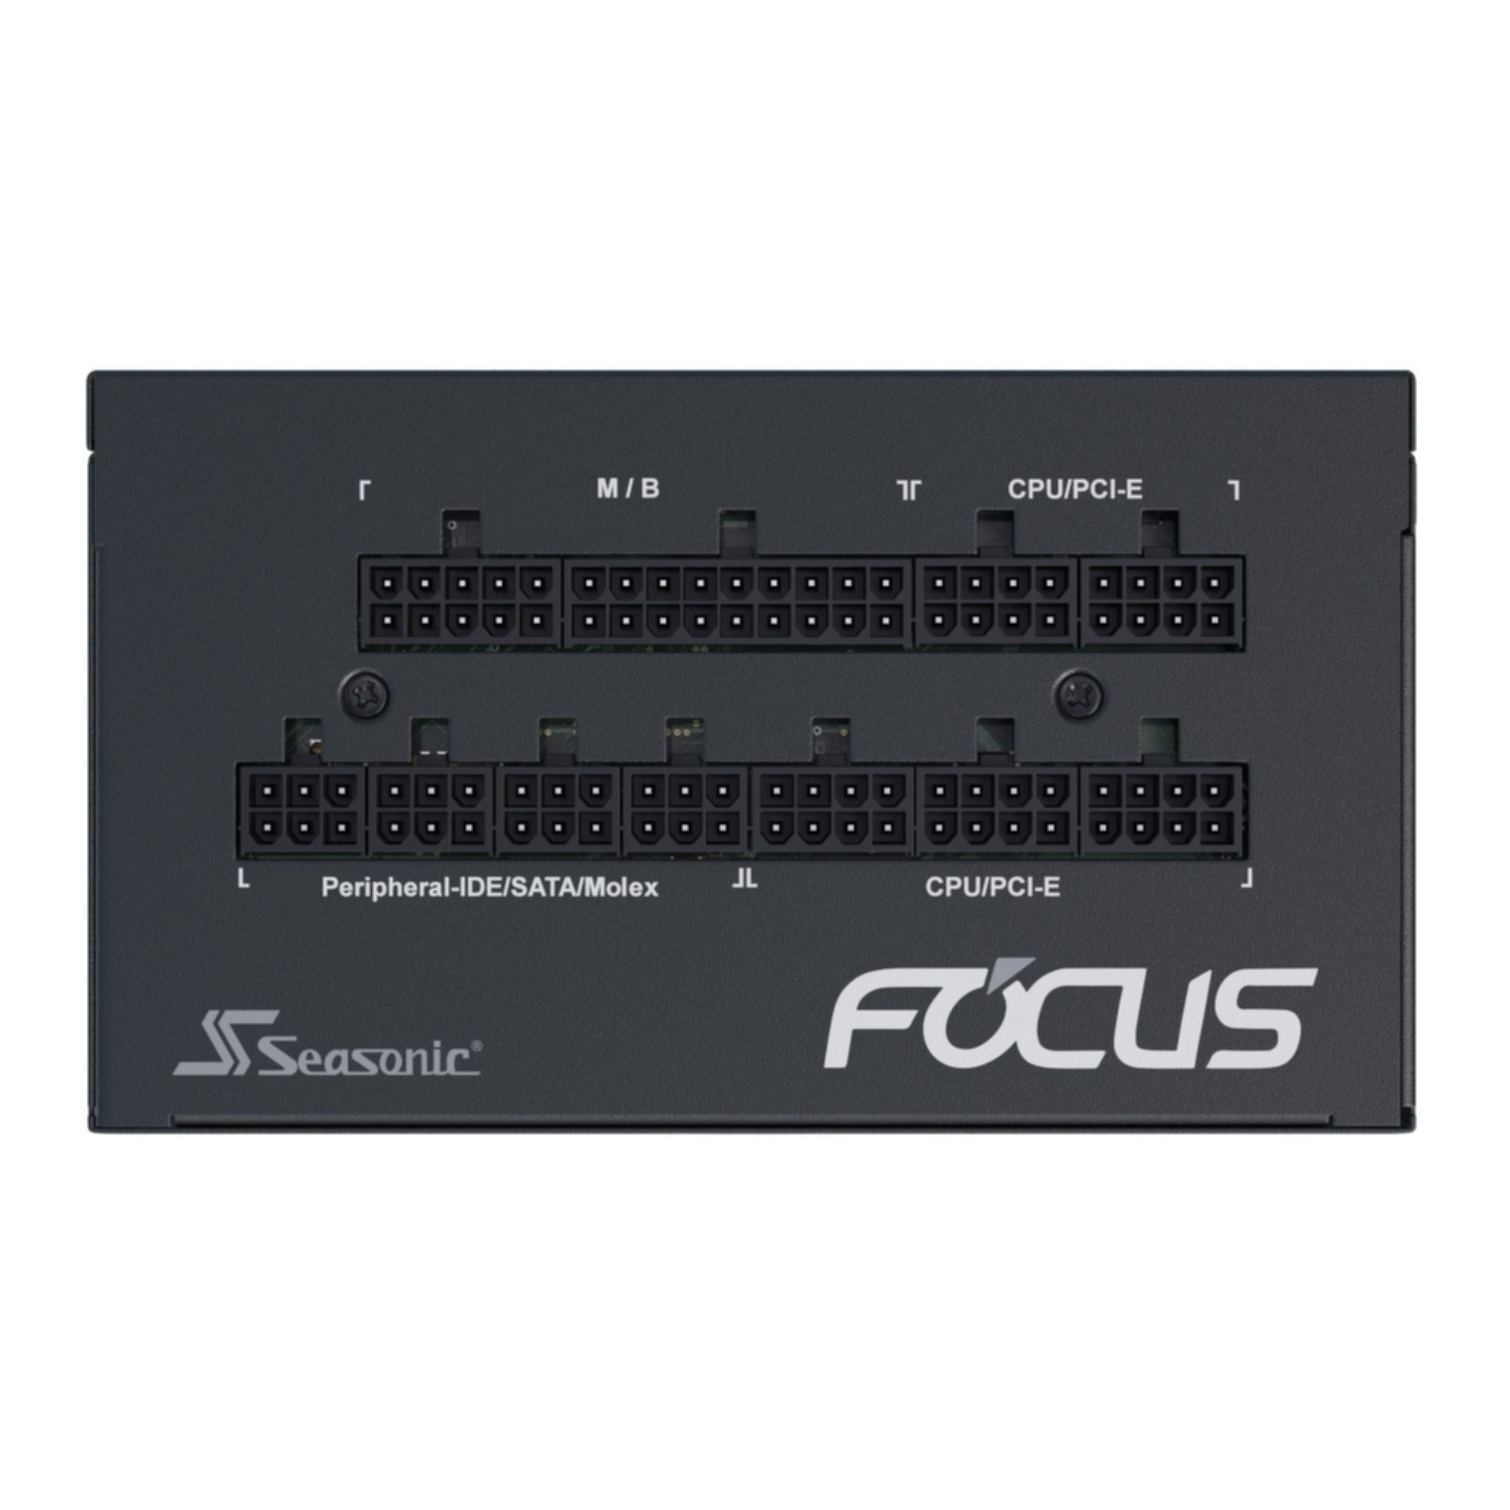 PC FOCUS-GX-550 EAC SEASONIC CB, cULus, (ErP) WEEE, TUV, Watt CCC, Products 6, Netzteil Energy-Related BSMI, RoHS, REACH, 550 Lot